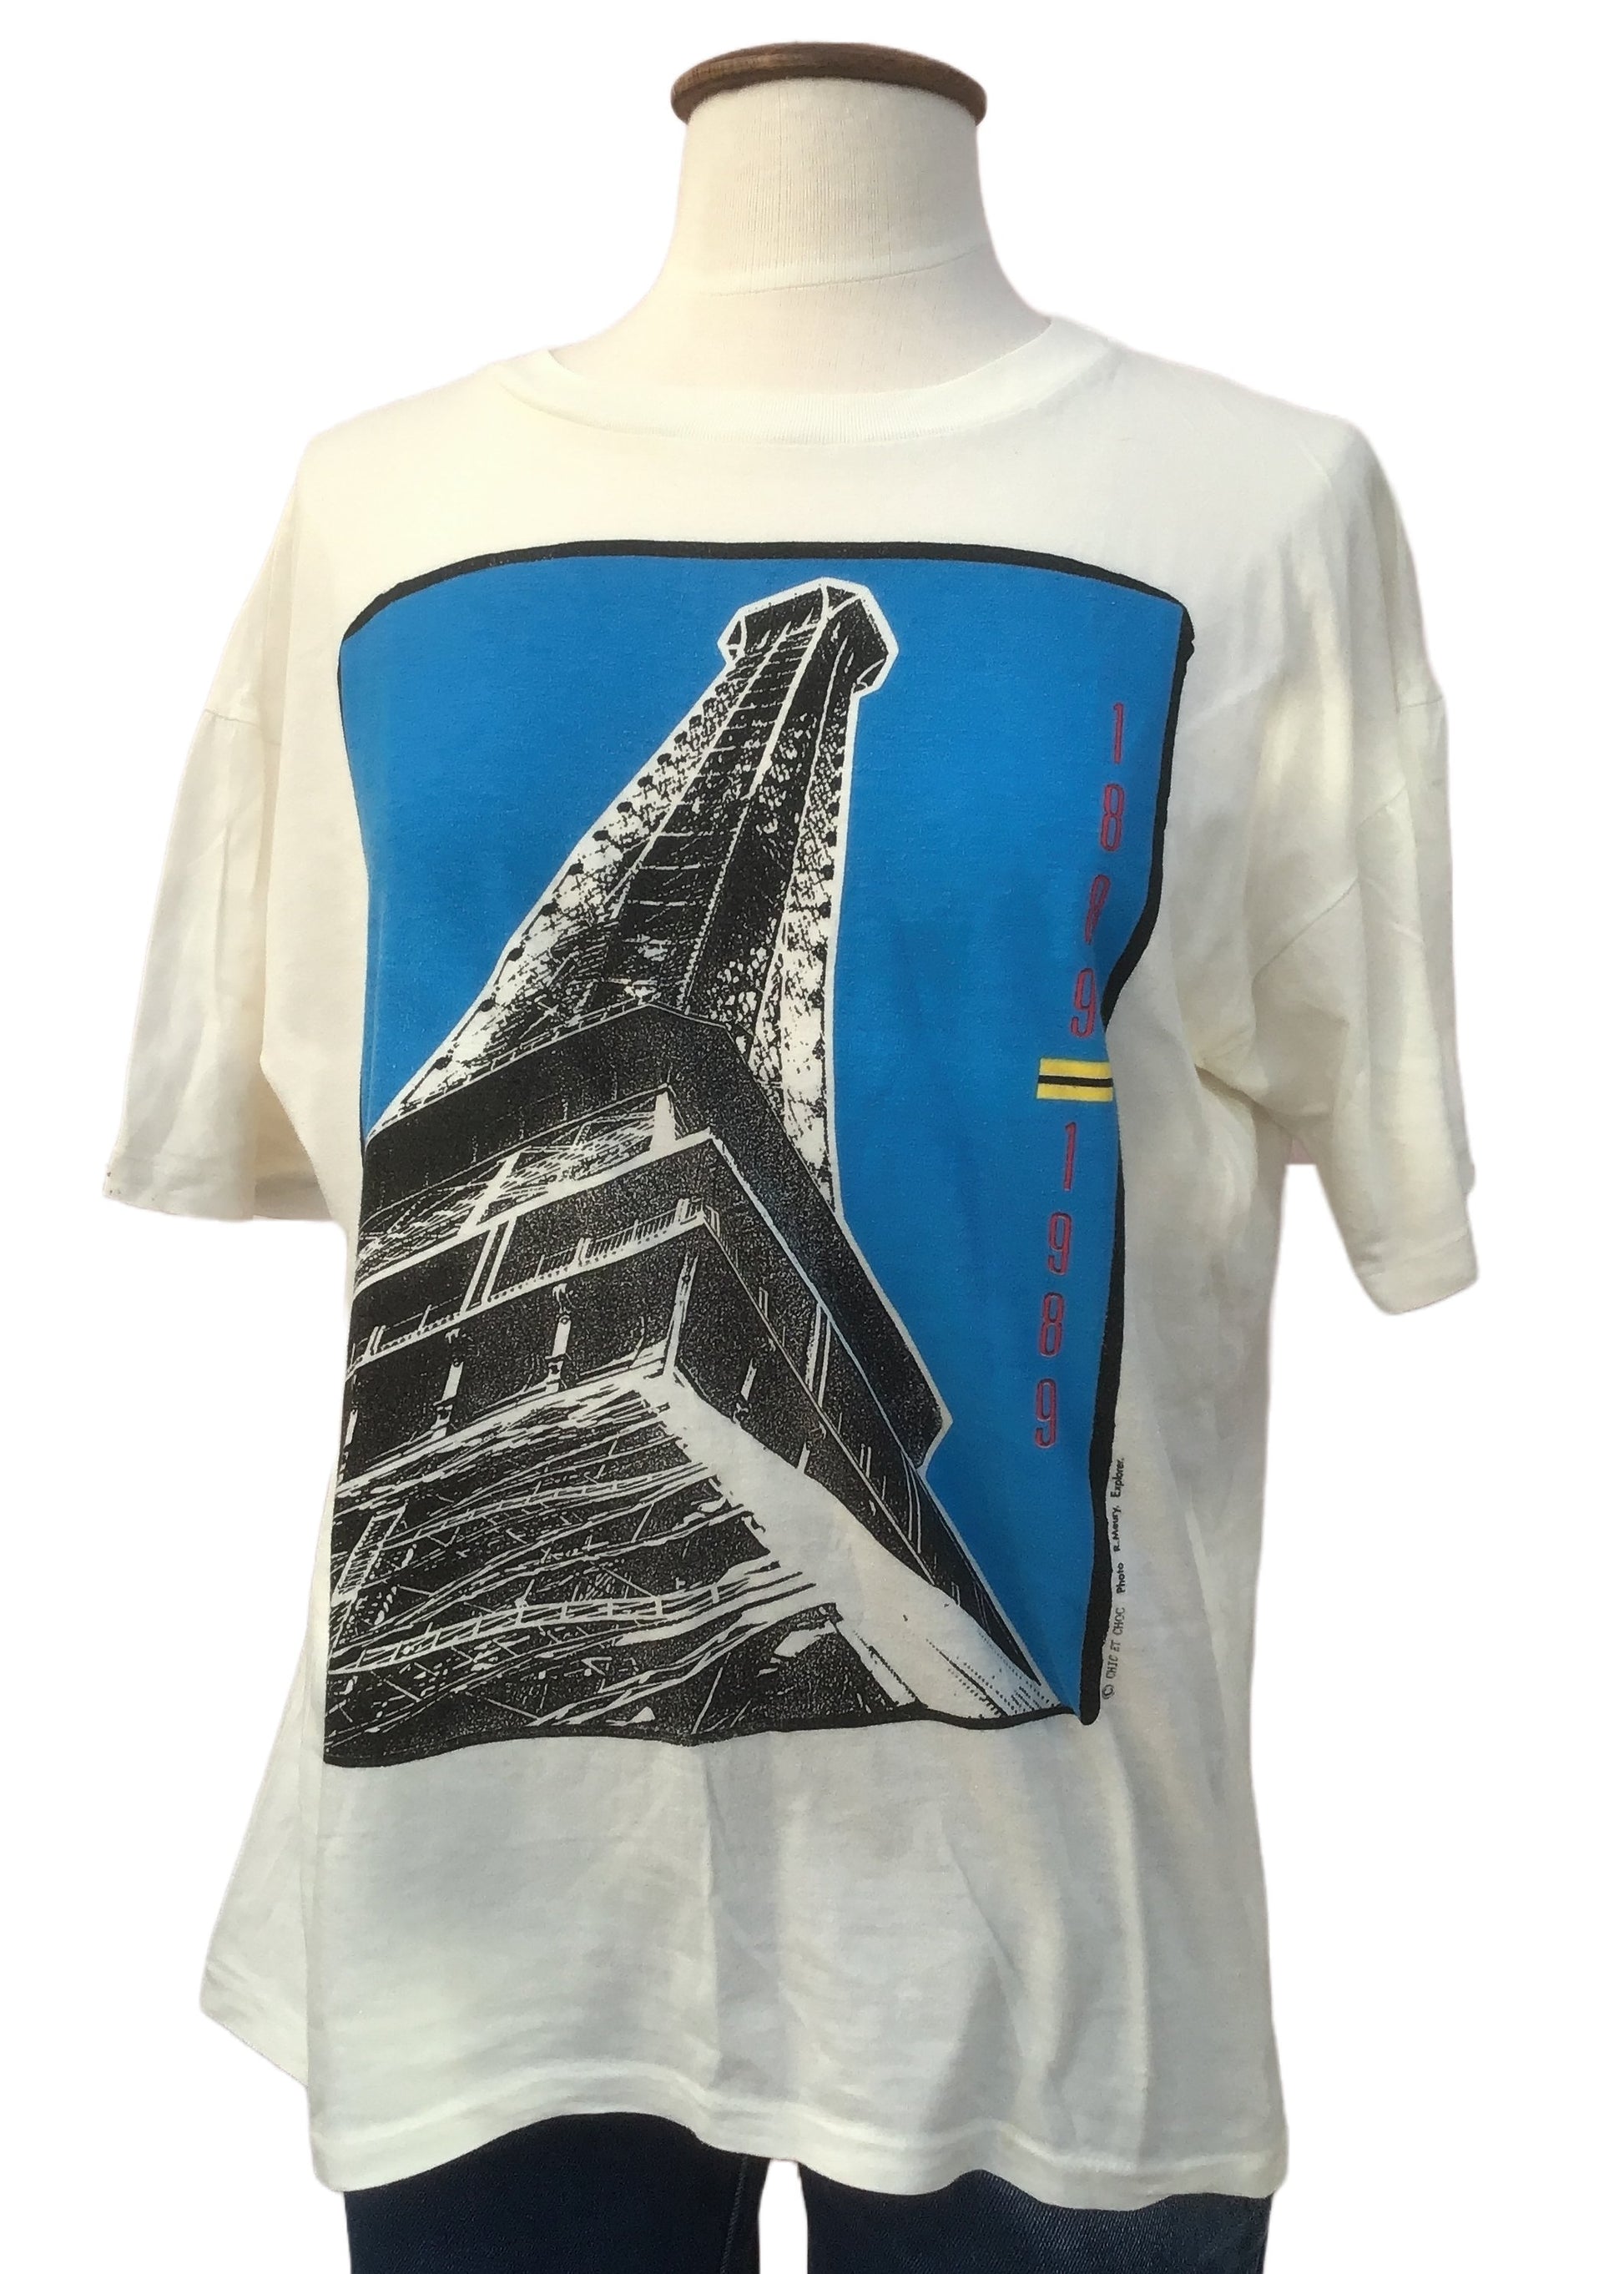 vintage 1989 chic et choc eiffel tower t shirt, photo by R Moury Explorer